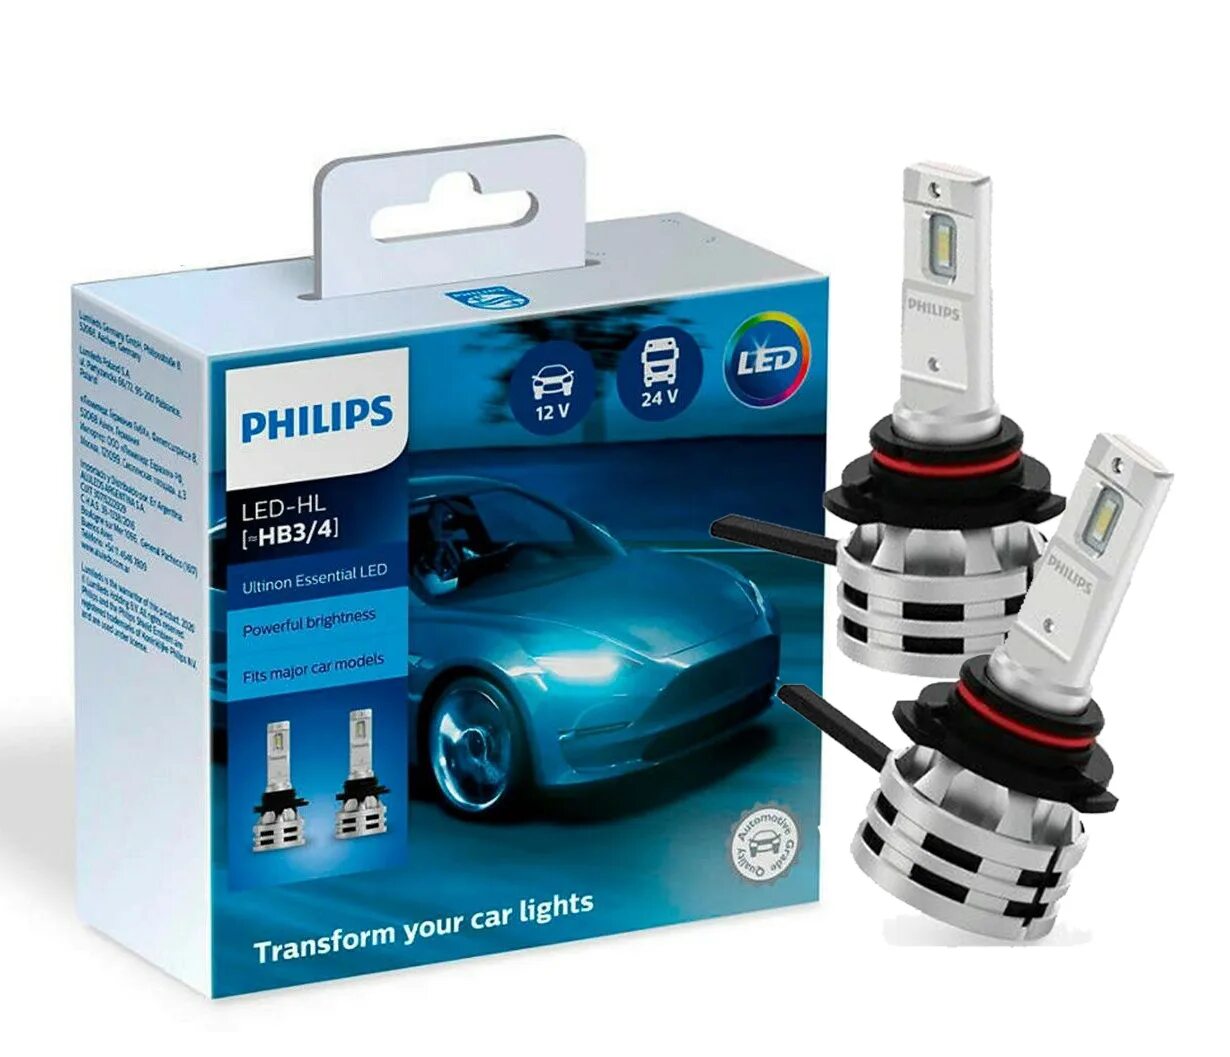 Led hb3 купить. Philips Ultinon Essential led, hb3. Лампы Sylvania hb3 led. Philips Ultinon Essential led, hb3 /hb4, 6500k Honda. Hb4 Philips led.